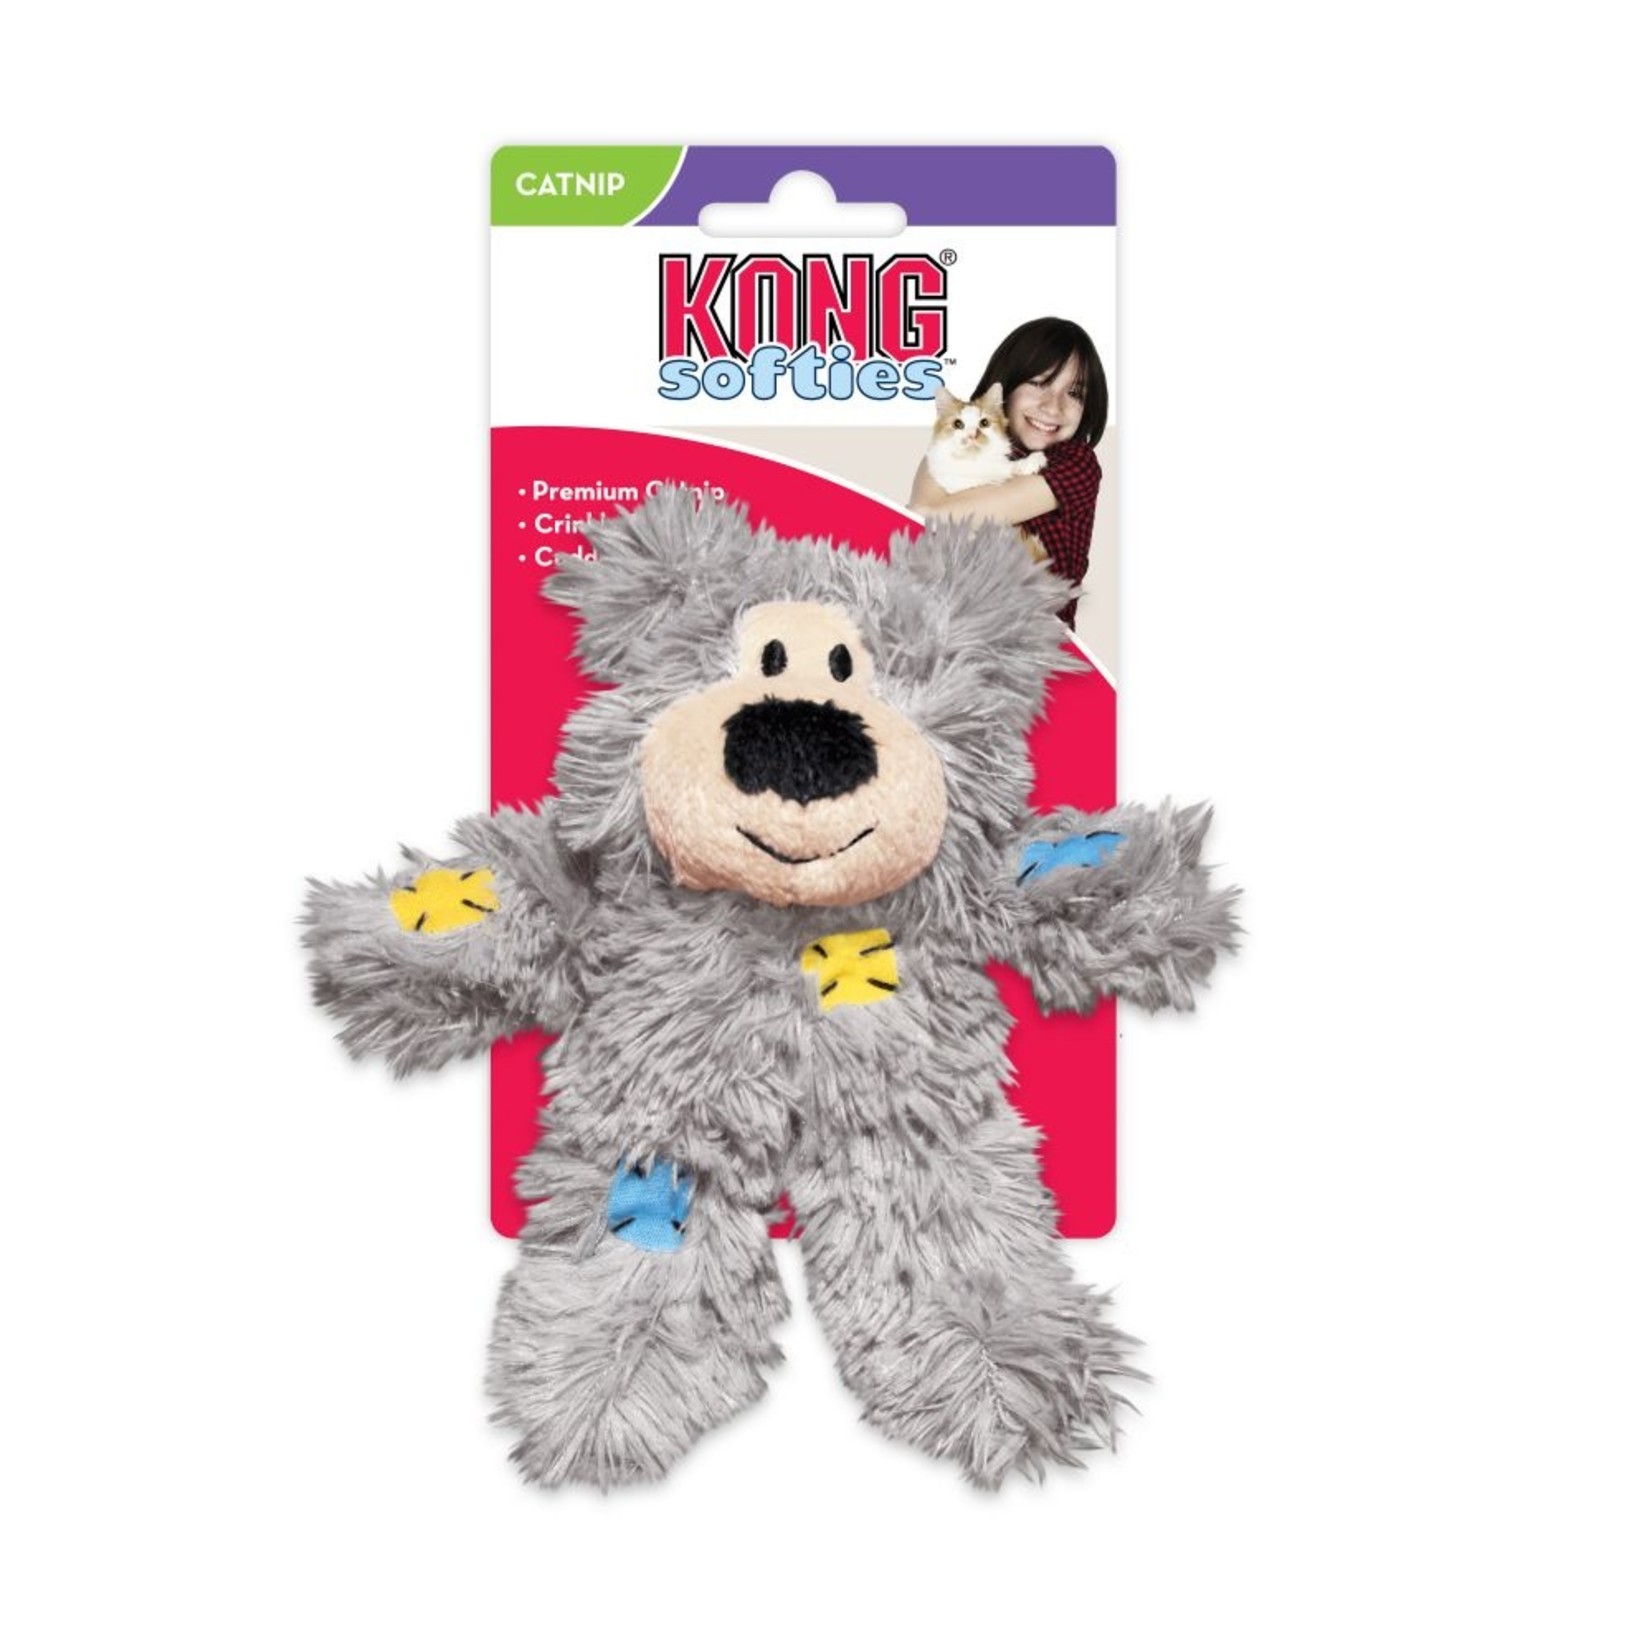 Kong Kong Softies Patchwork Bear Cat Toy